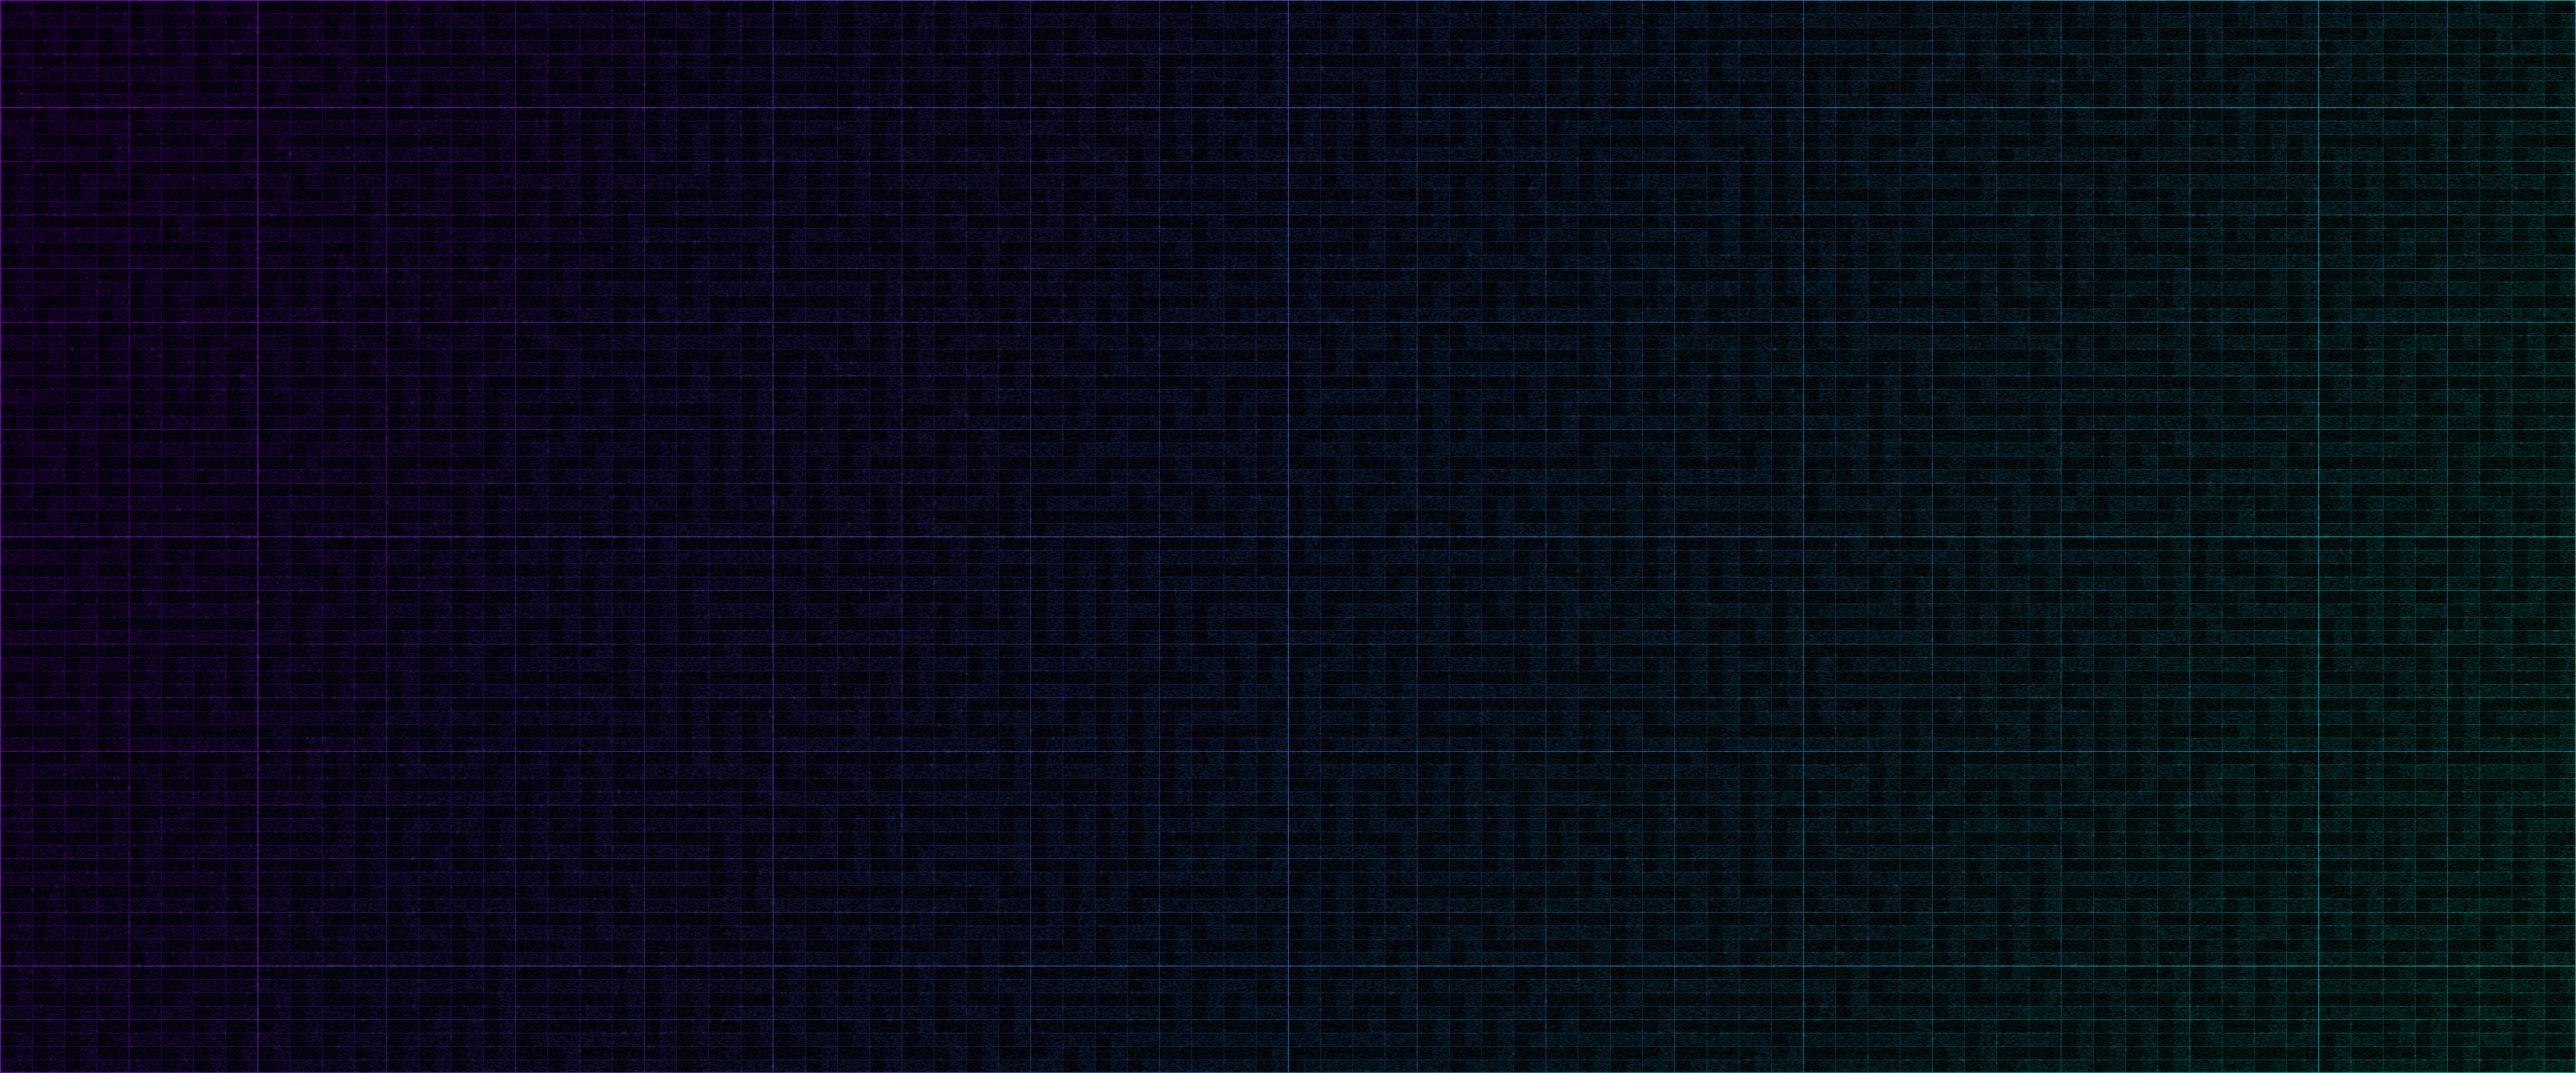 General 3840x1600 grid gradient minimalism lines